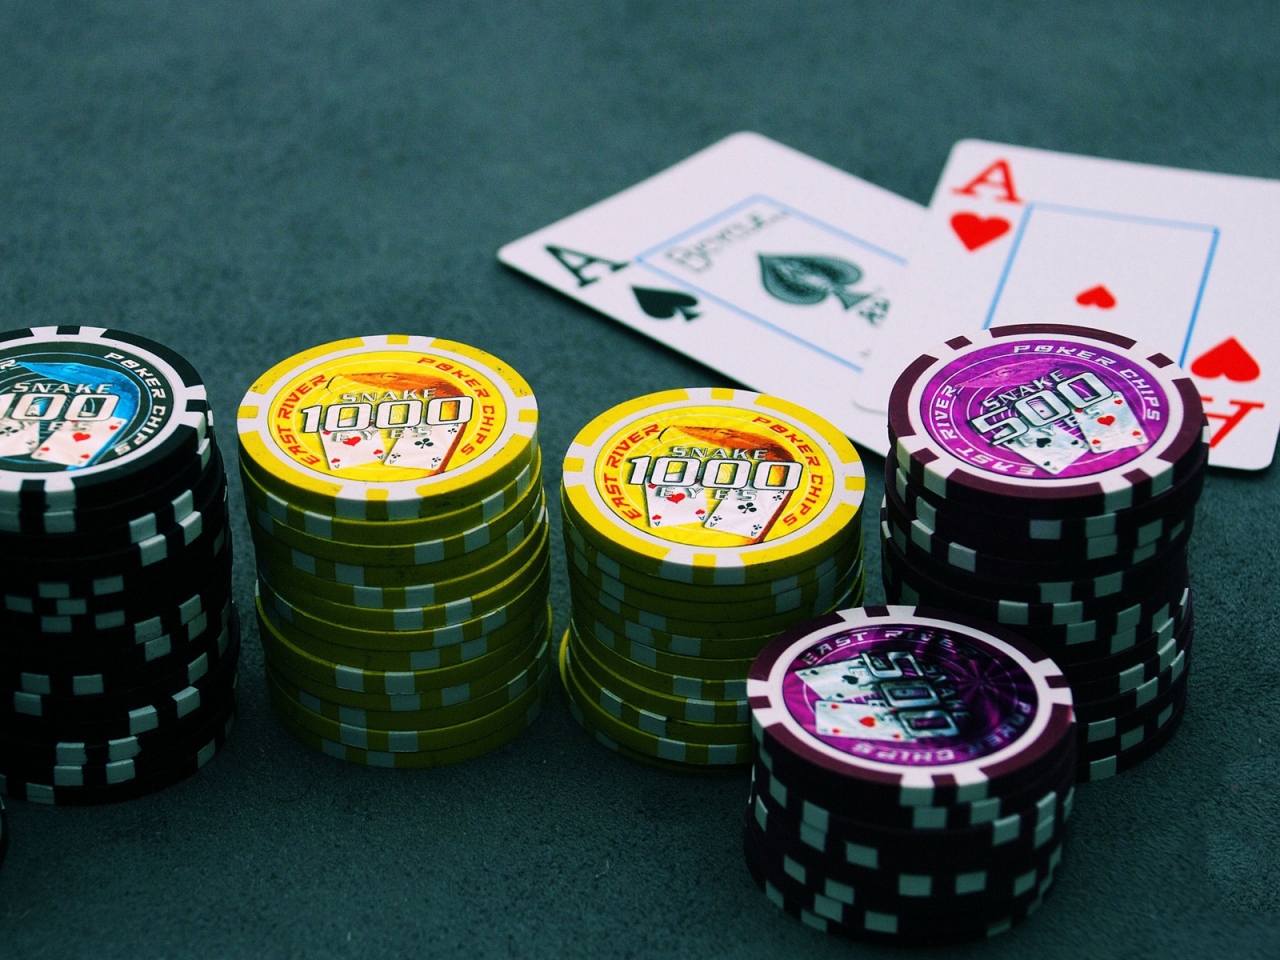 Poker for 1280 x 960 resolution